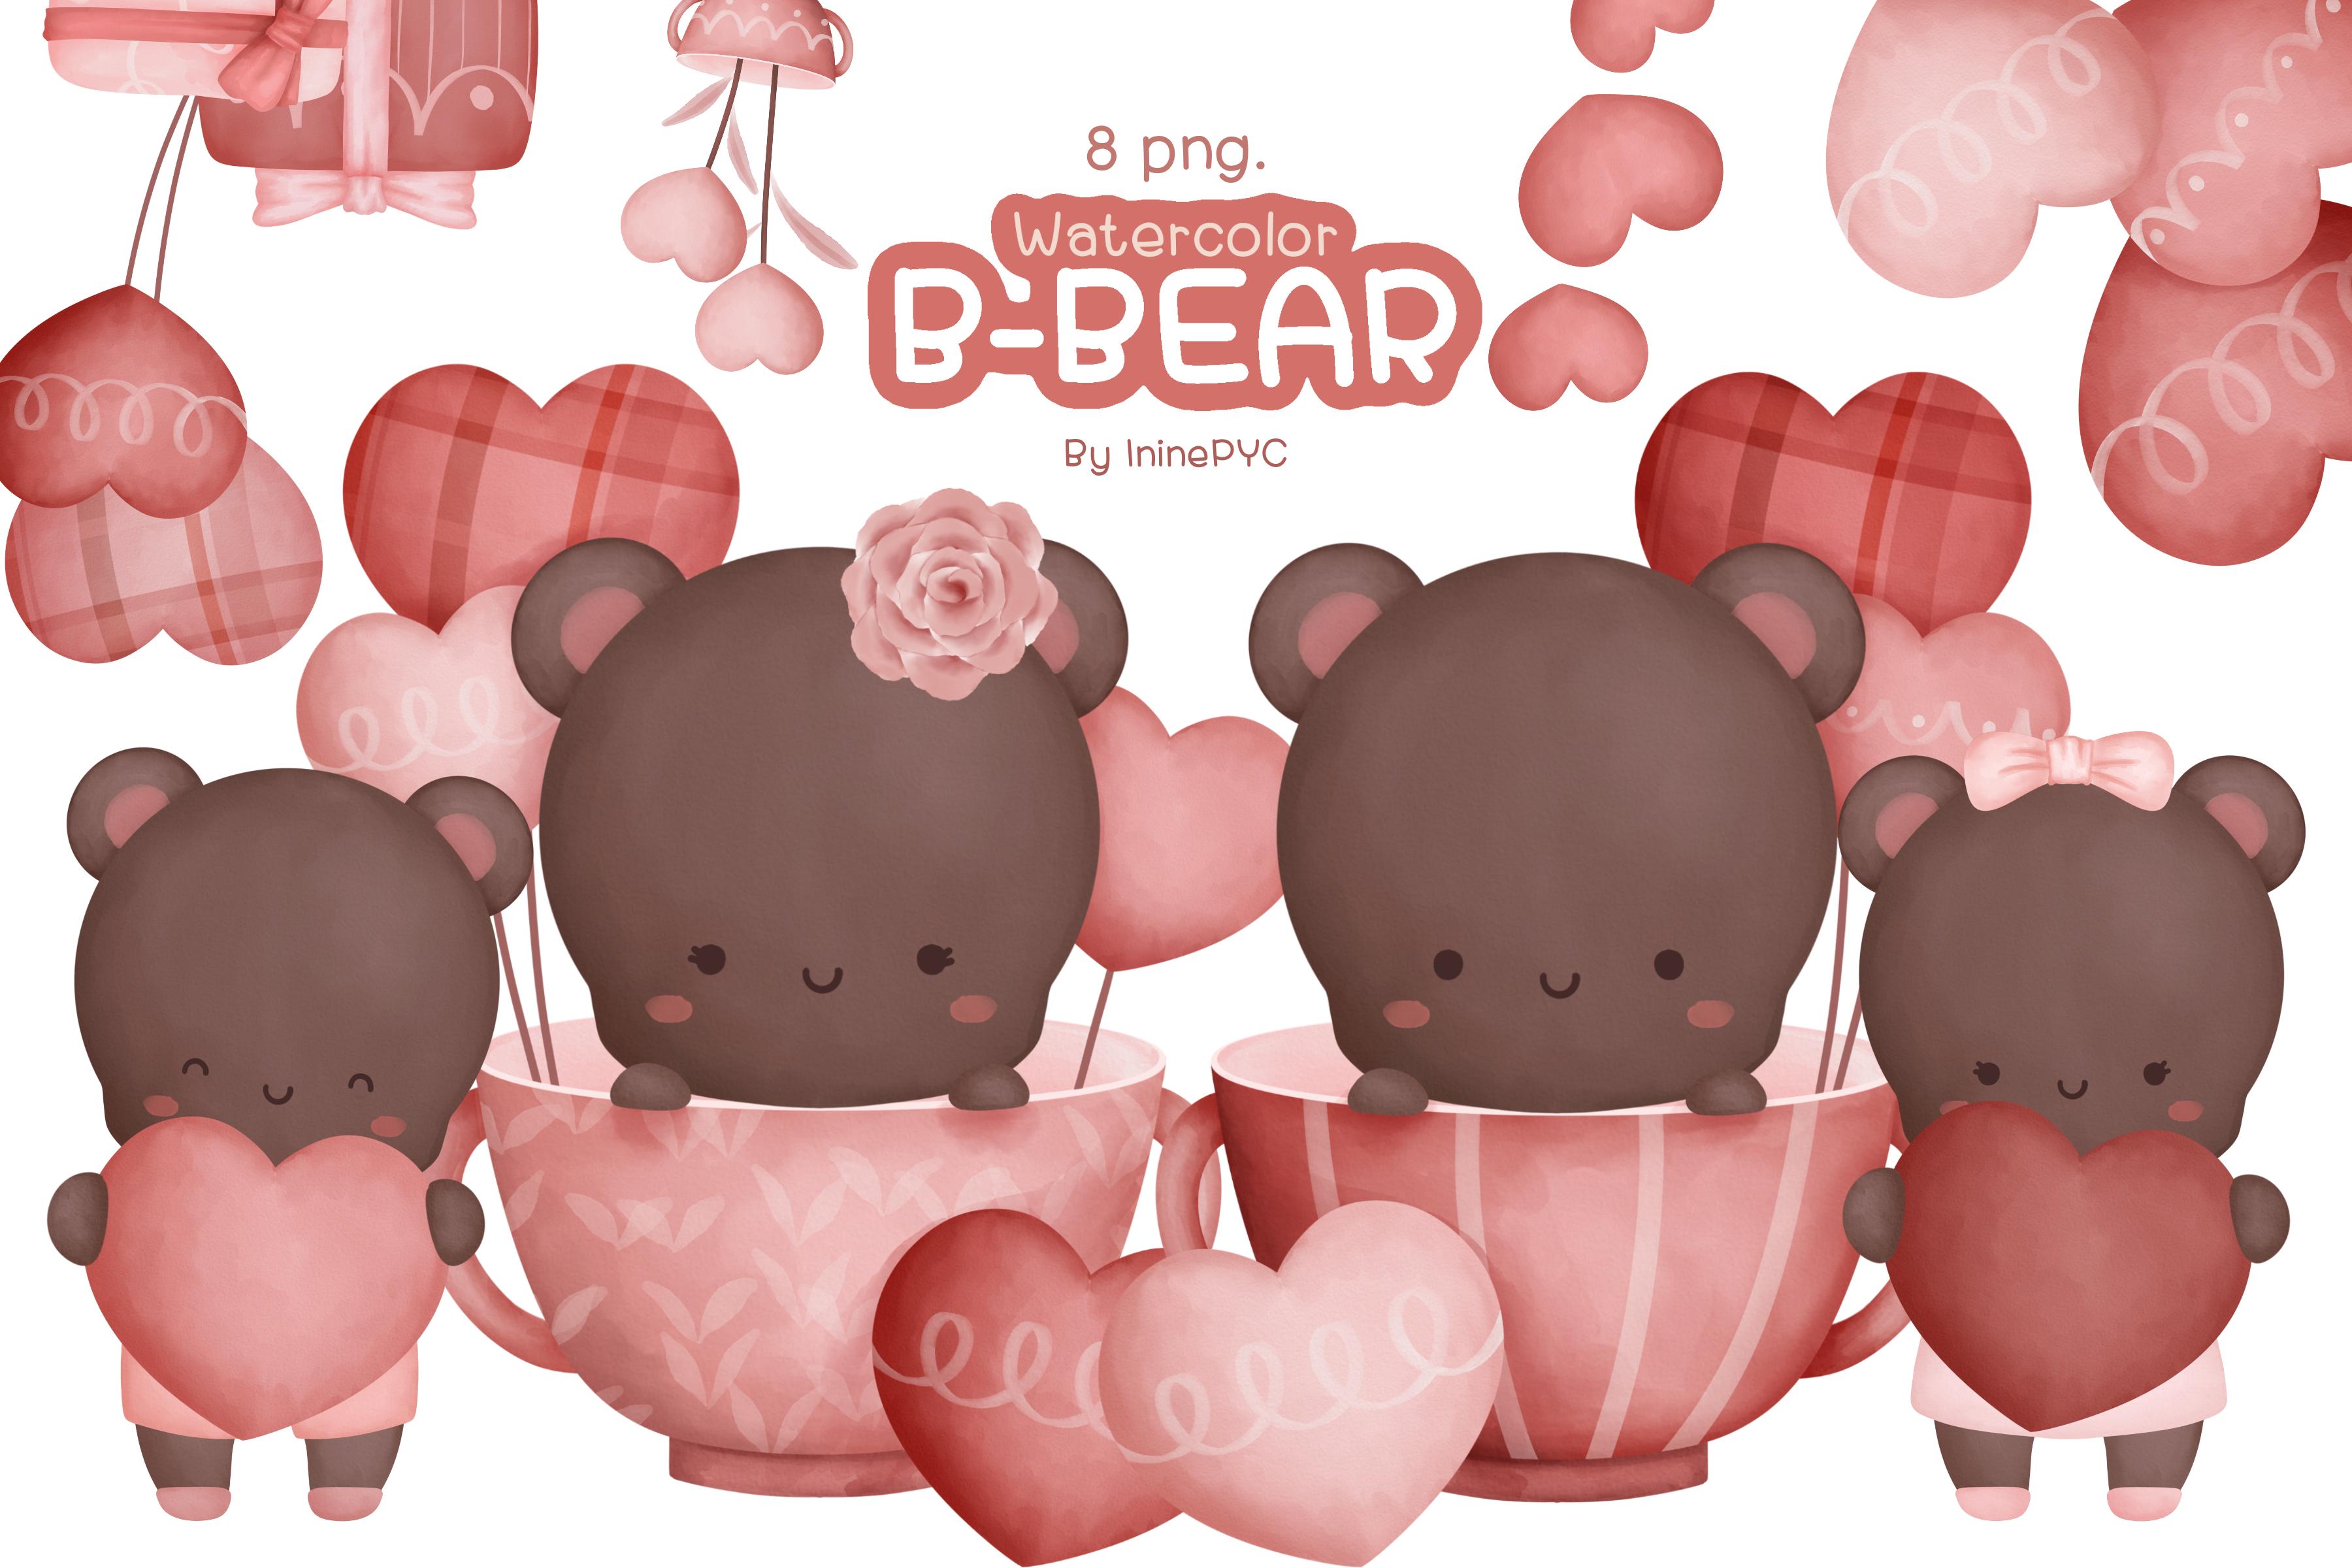 B-BEAR Watercolor (valentine)